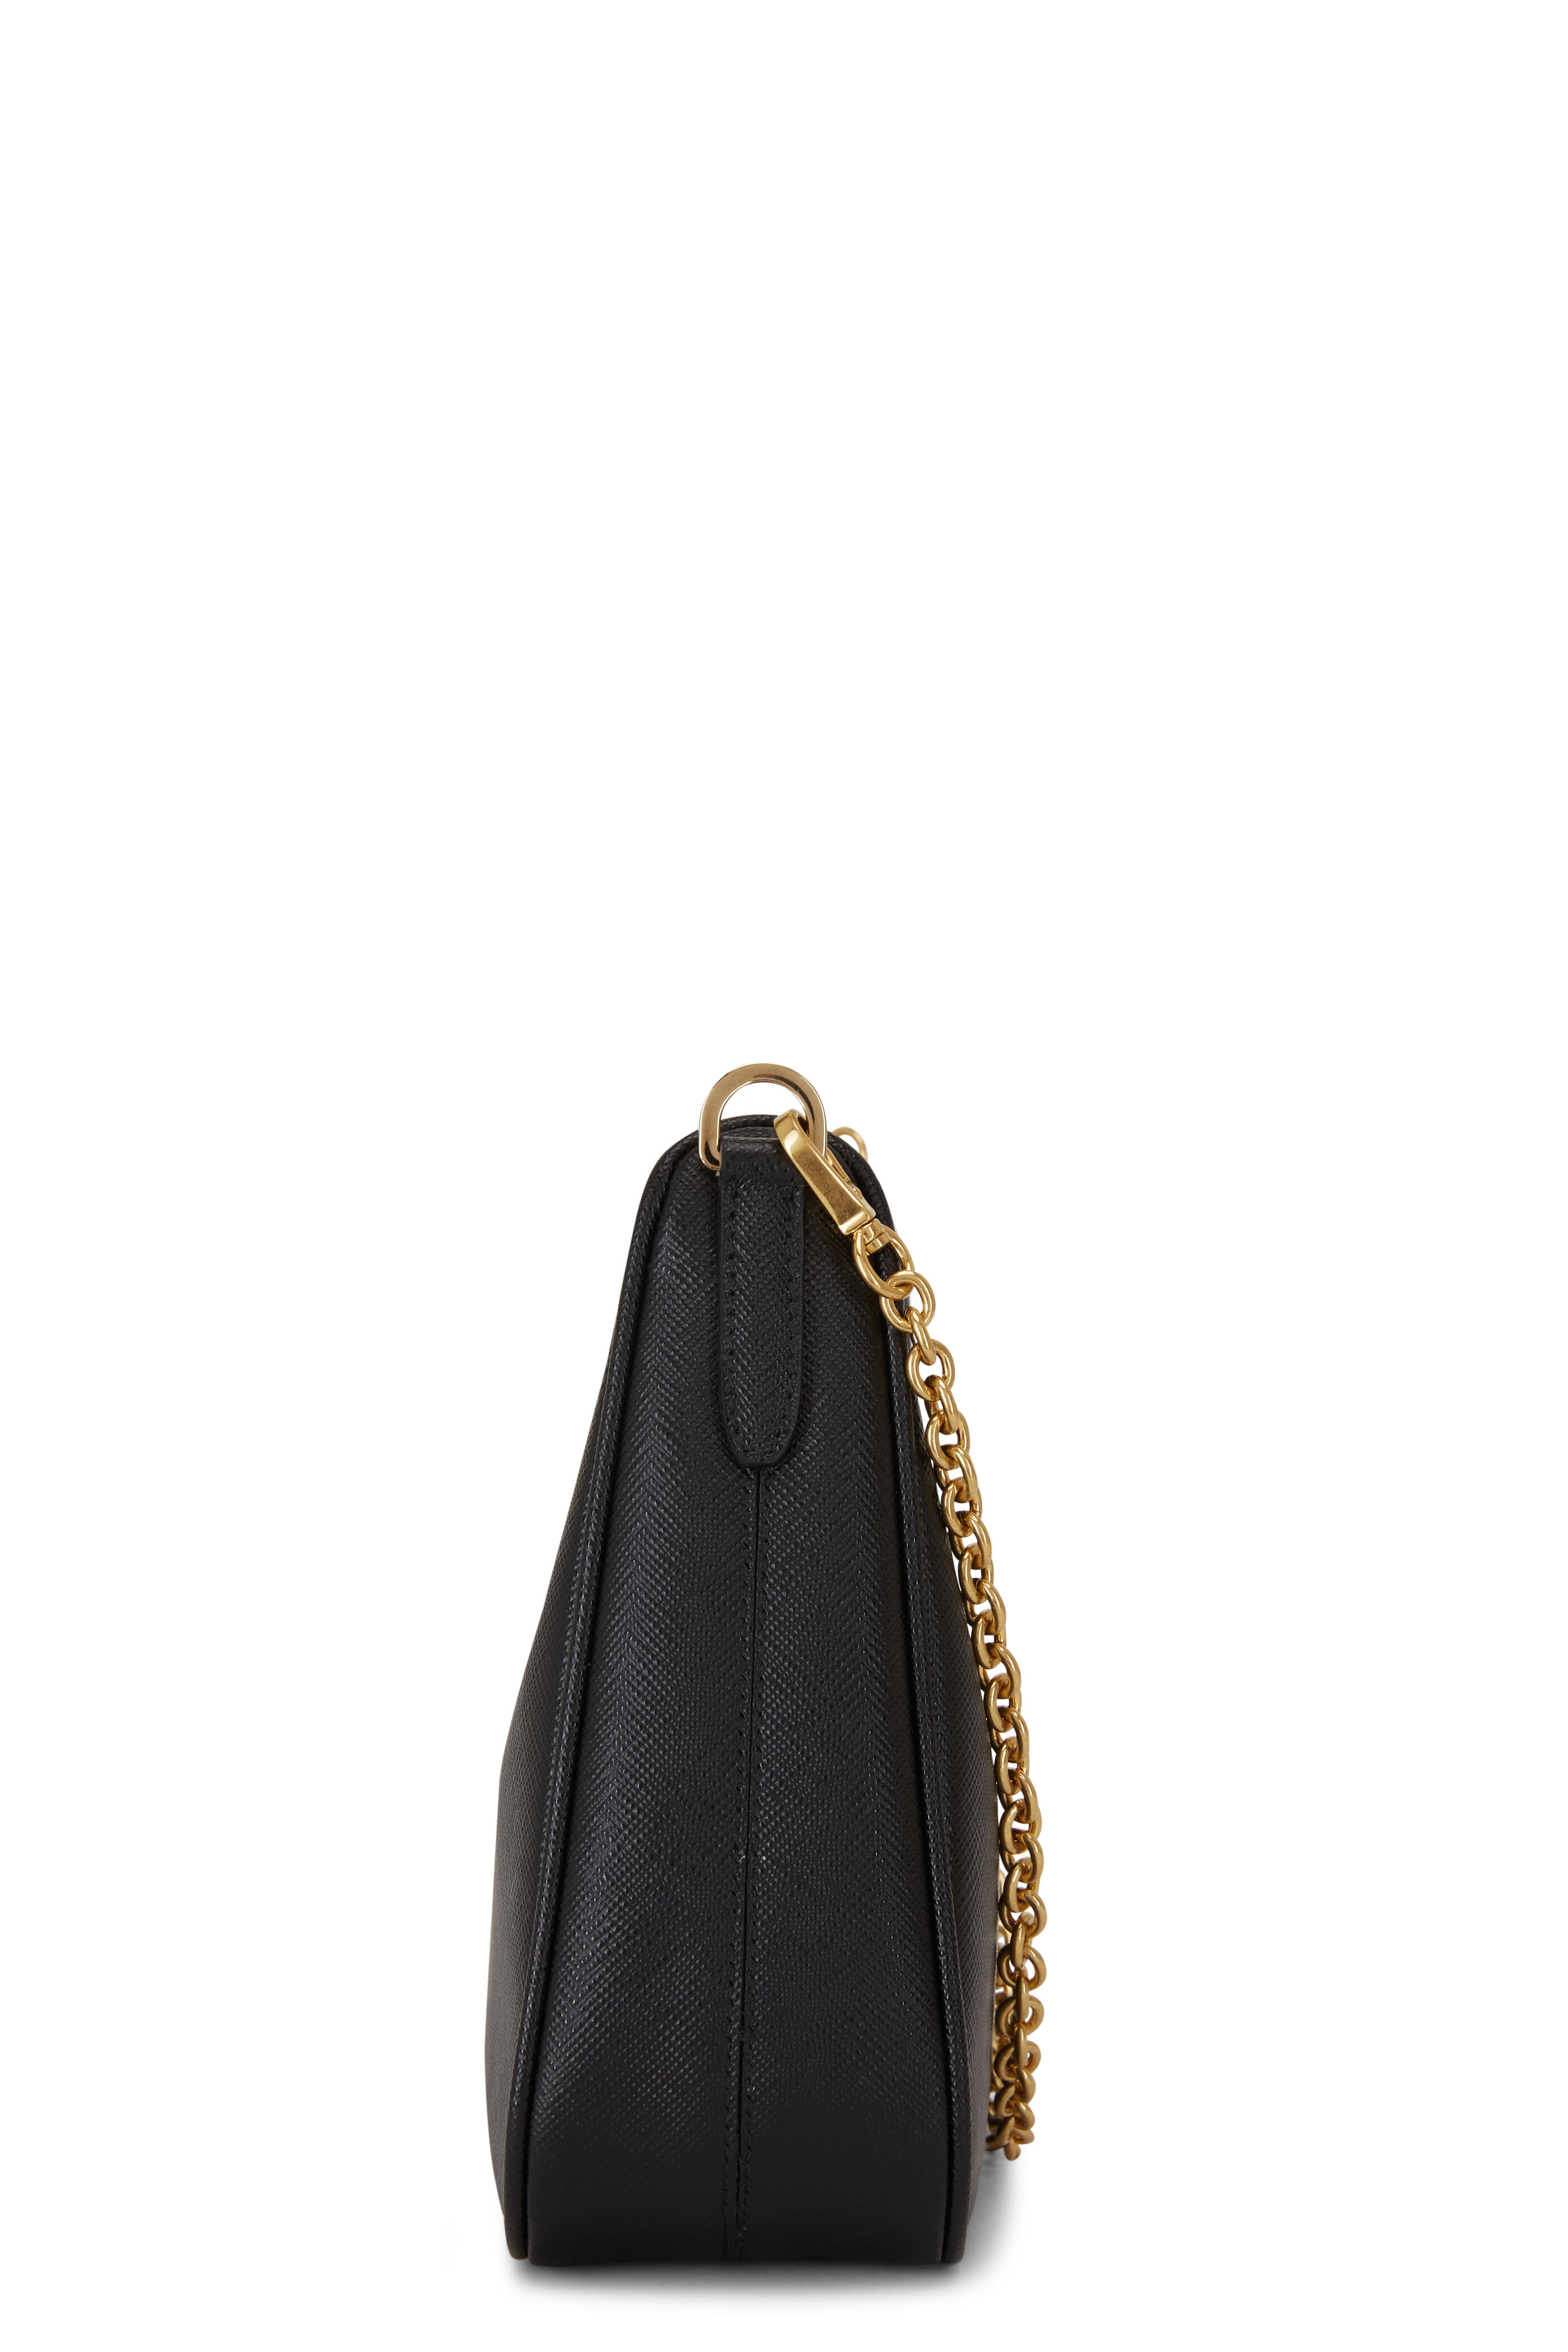 Prada Emblème Saffiano Shoulder Bag in Black